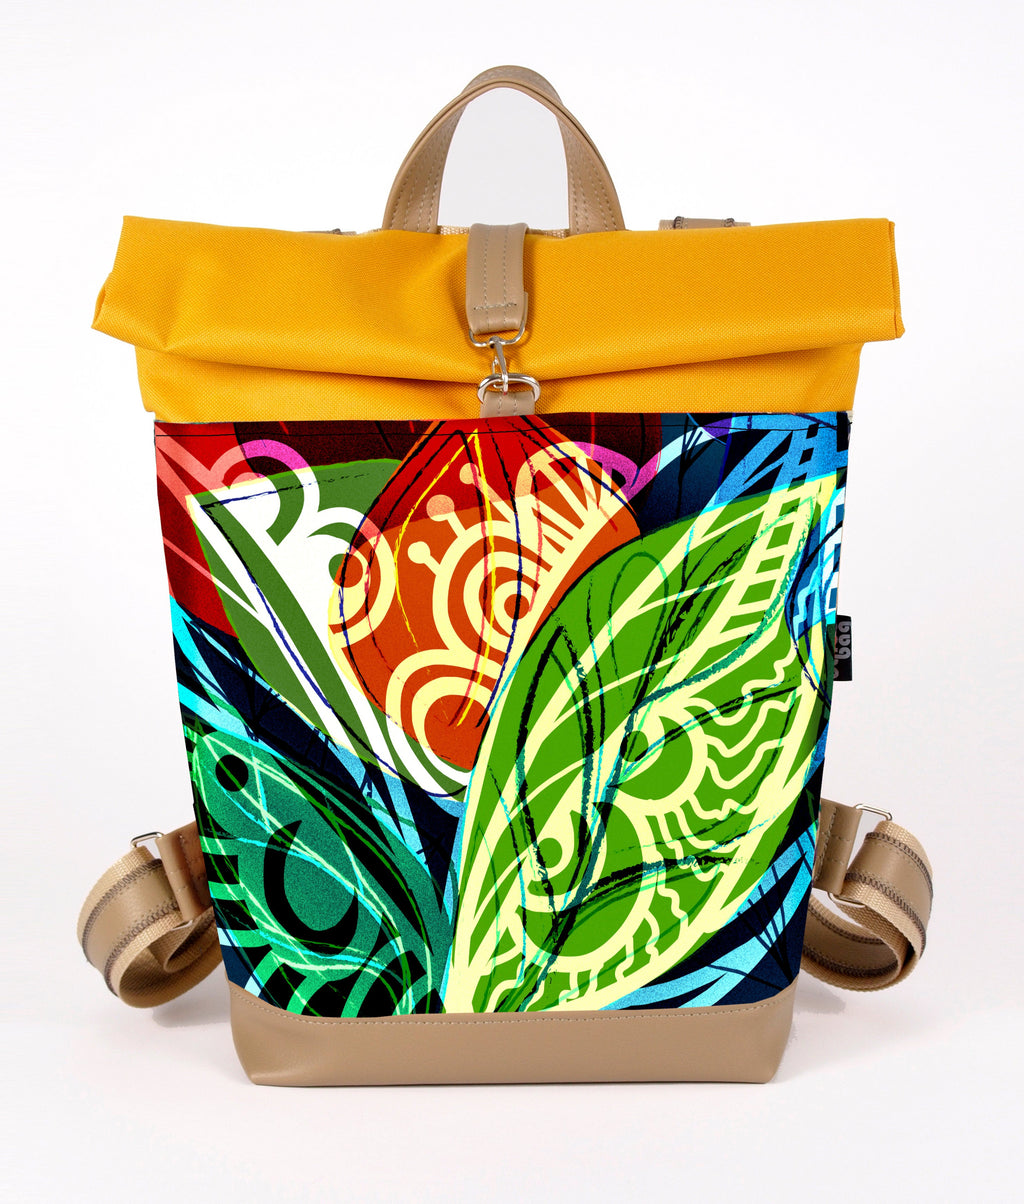 Bardo roll backpack - Awakening - Premium Bardo backpack from BARDO ART WORKS - Just lvabstract, art, backpack, dark blue, gift, green, handemade, jazz, leaves, orange, purple, red, tablet, urban style, vegan leather, woman85.00! Shop now at BARDO ART WORKS